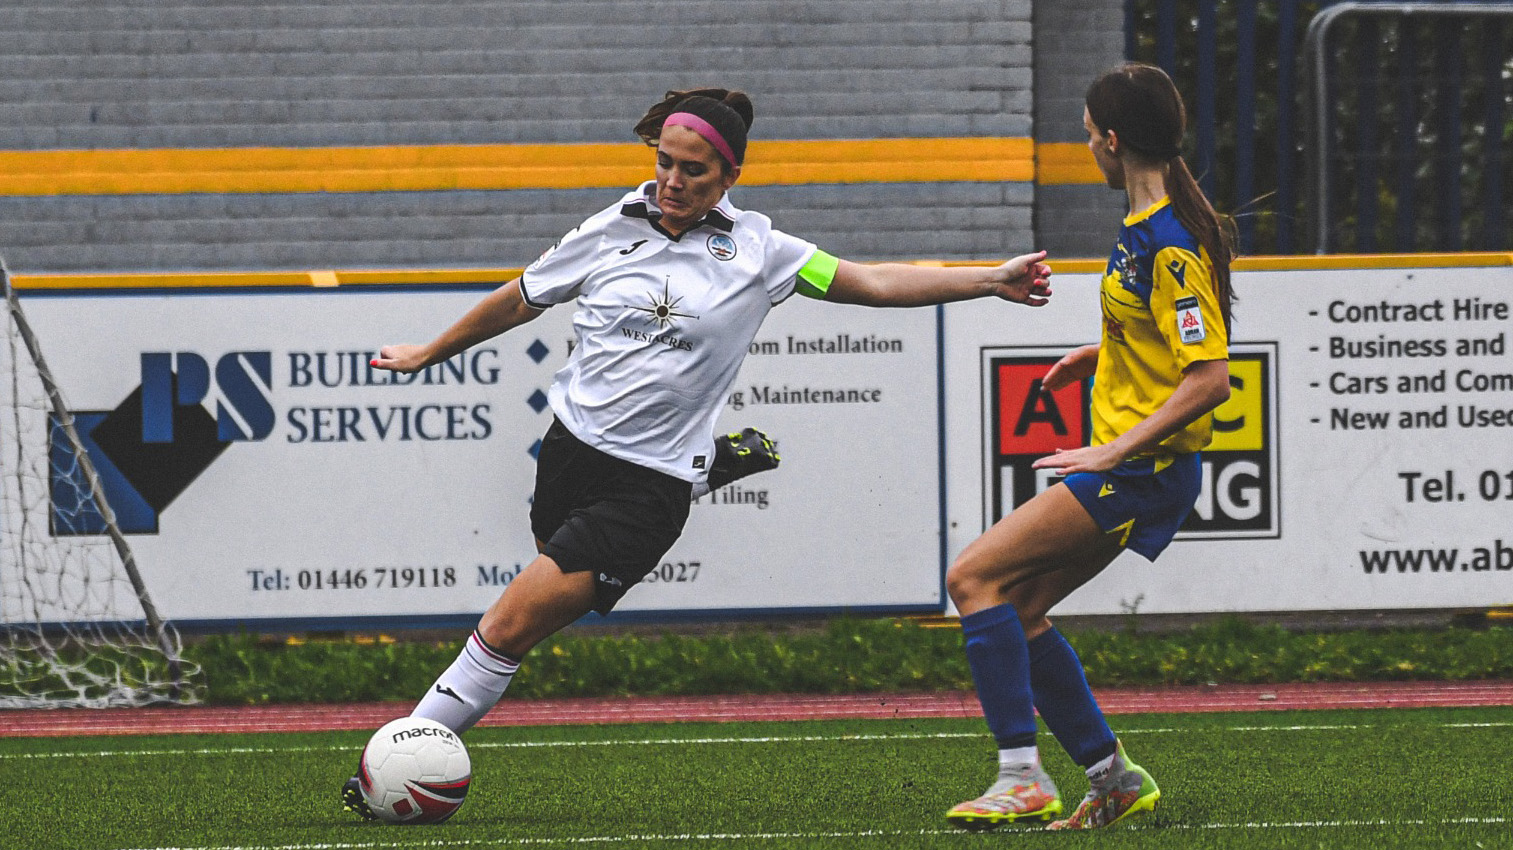 Emma Beynon kicks the ball for Swansea City Ladies